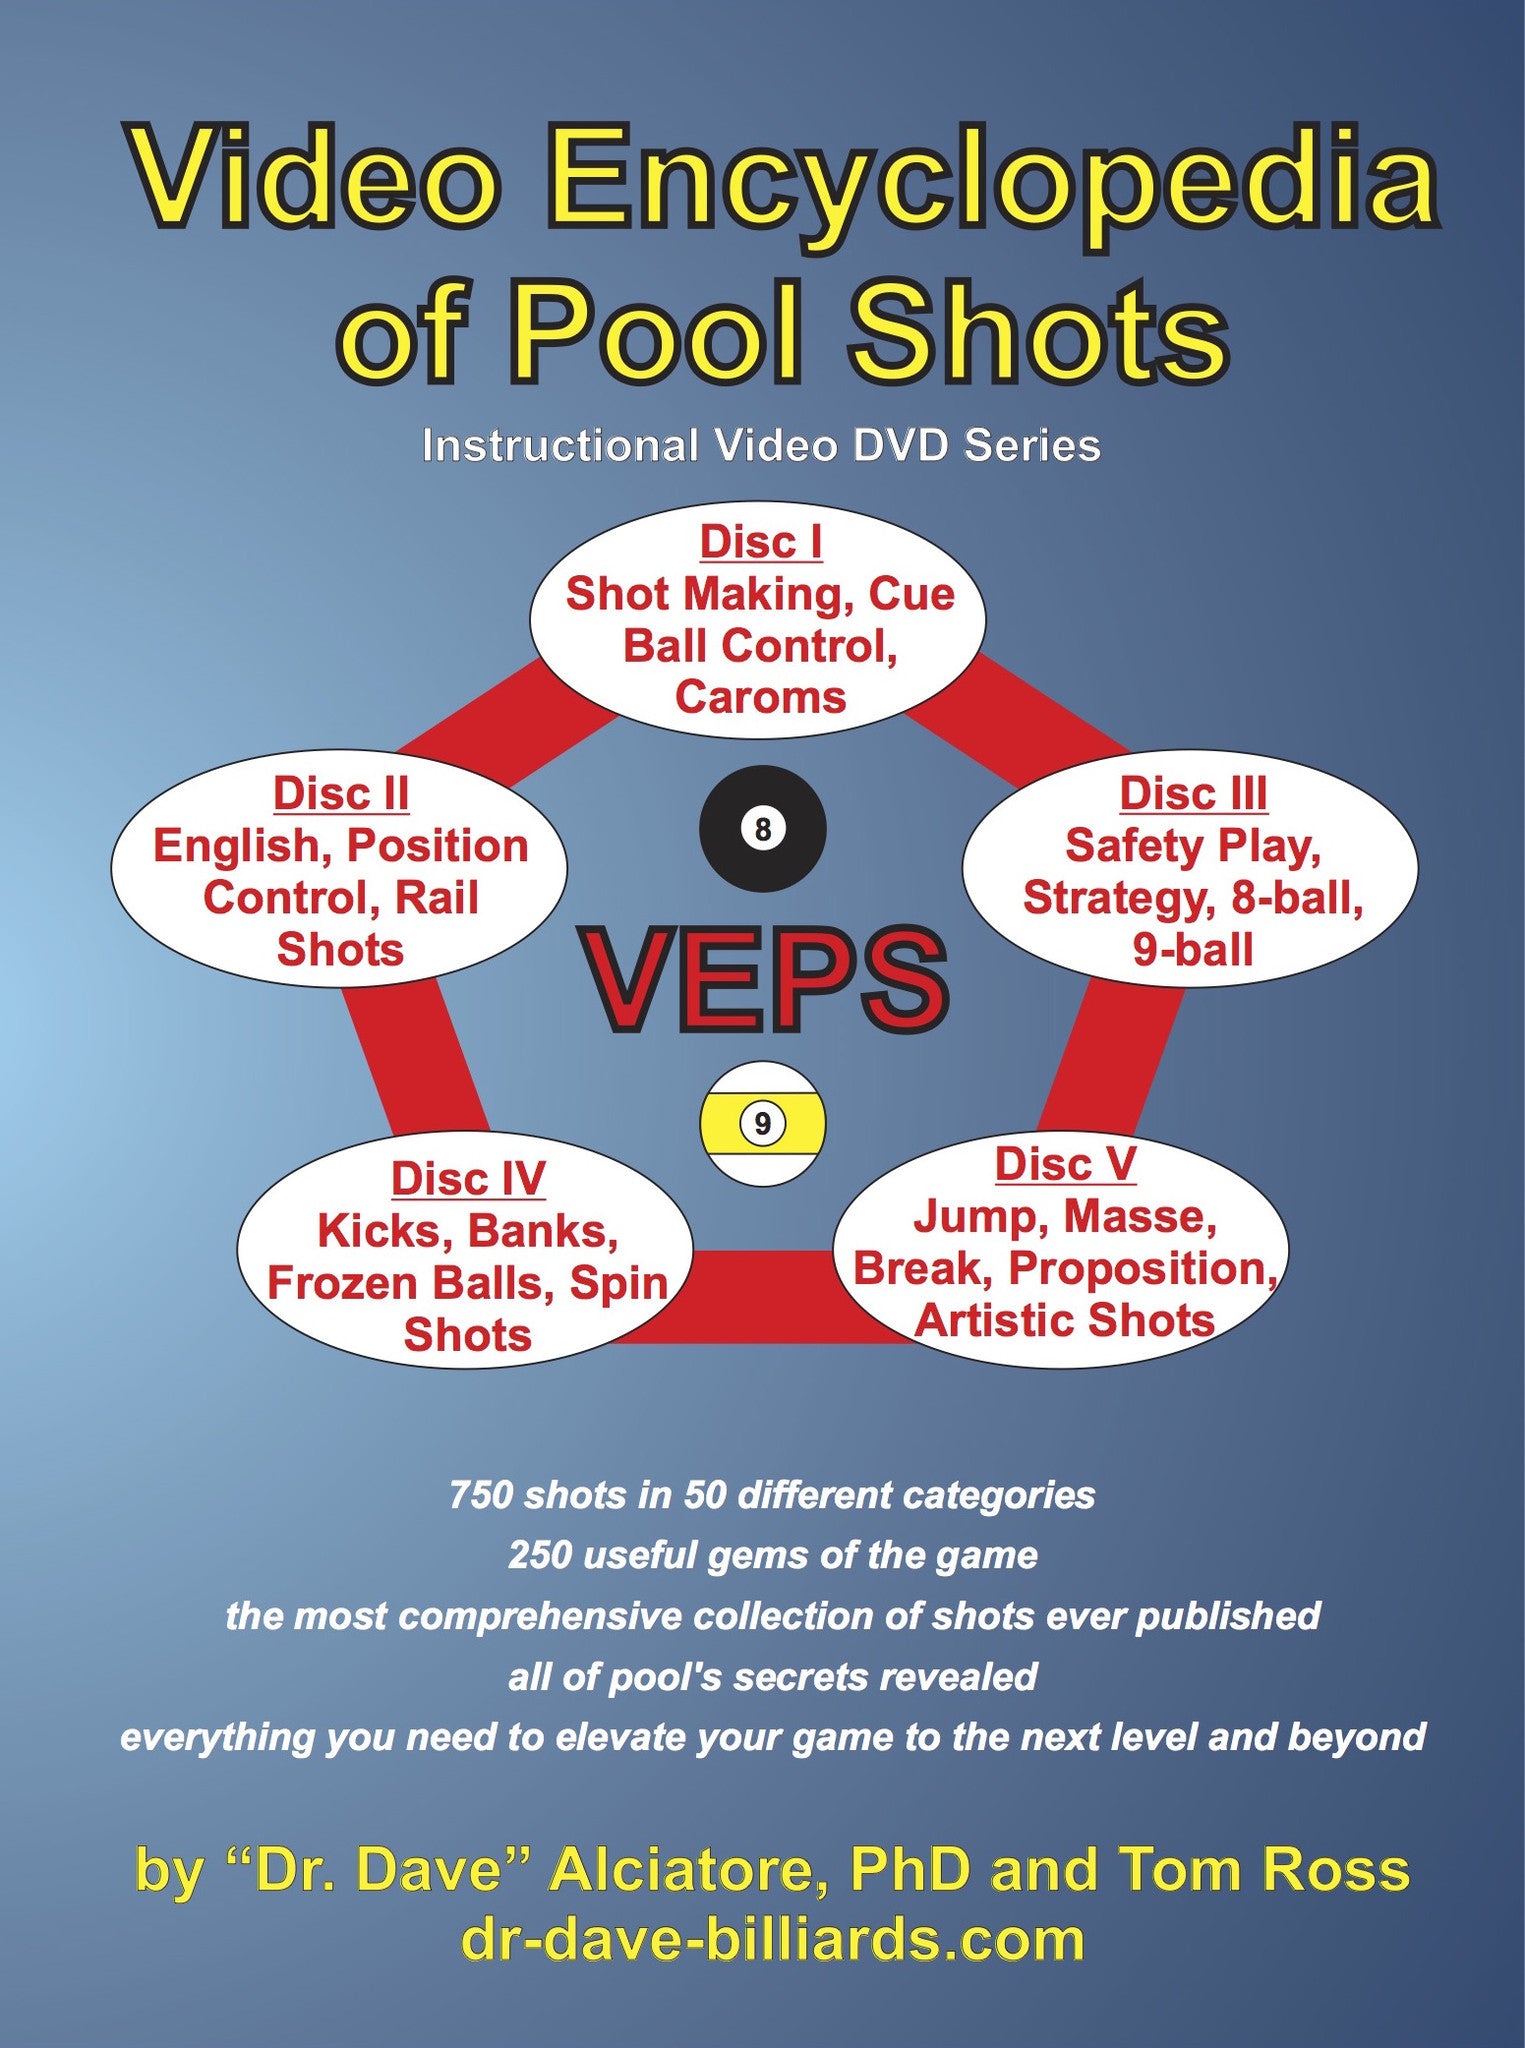 Video Encyclopedia of Pool Shots DVD Series